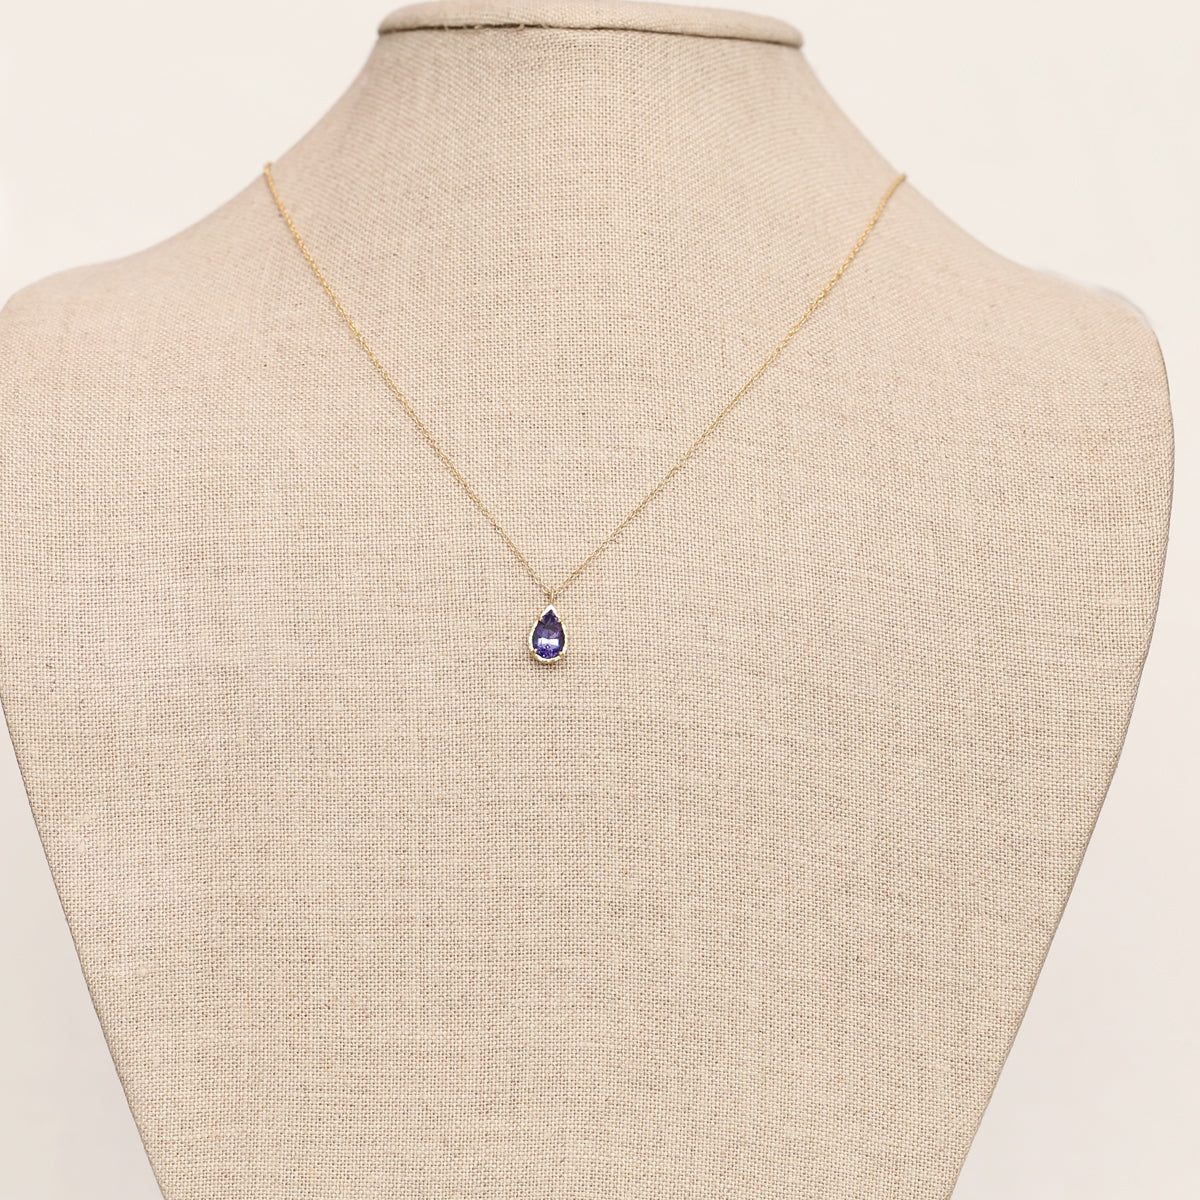 1.59ct Tanzanite necklace